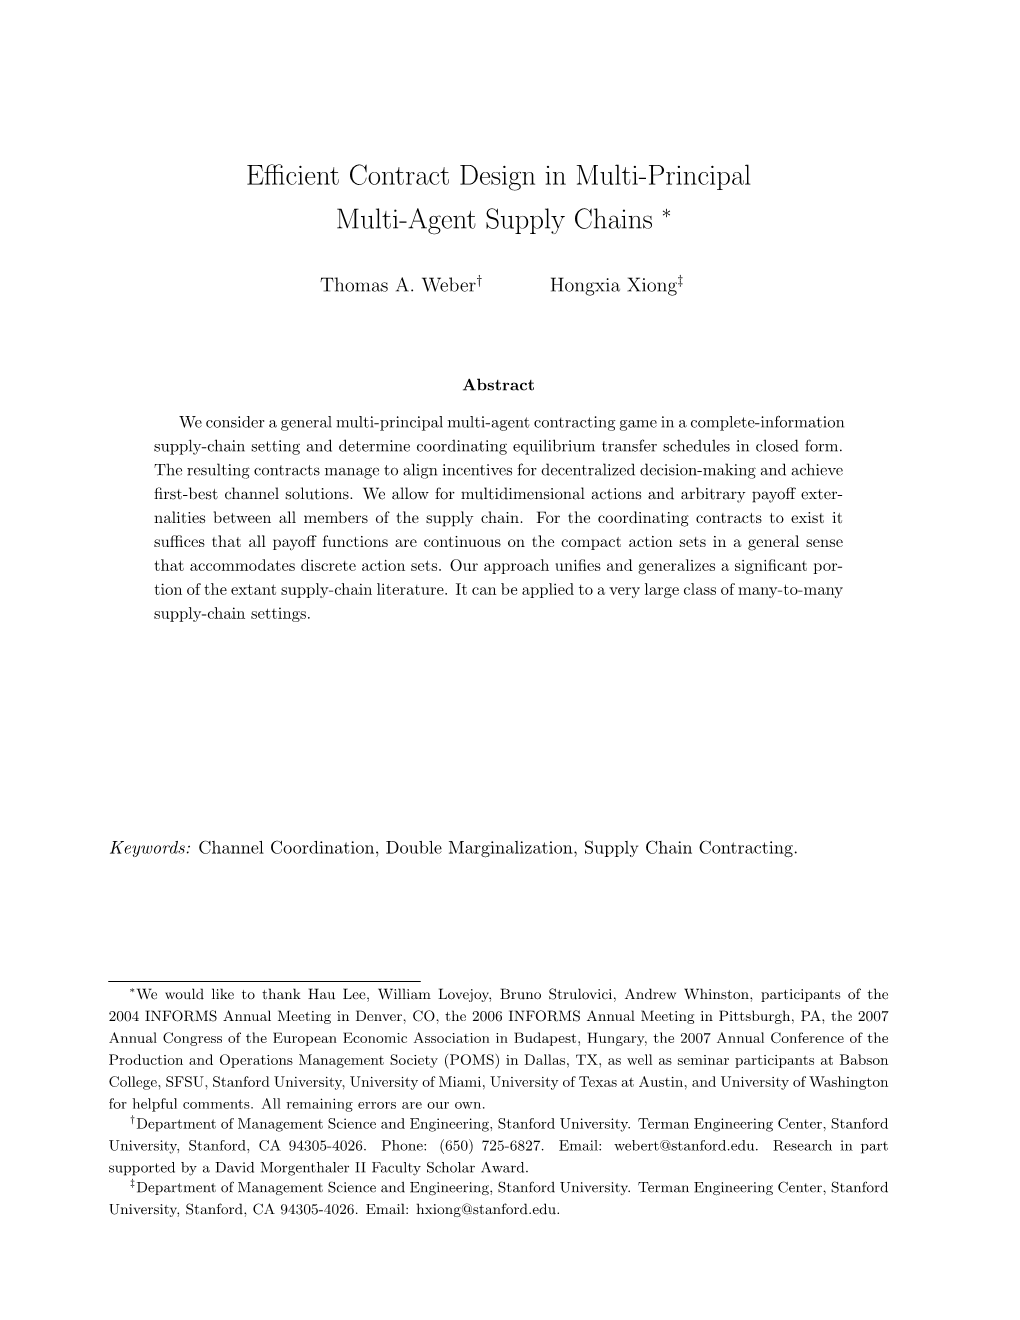 Efficient Contract Design in Multi-Principal Multi